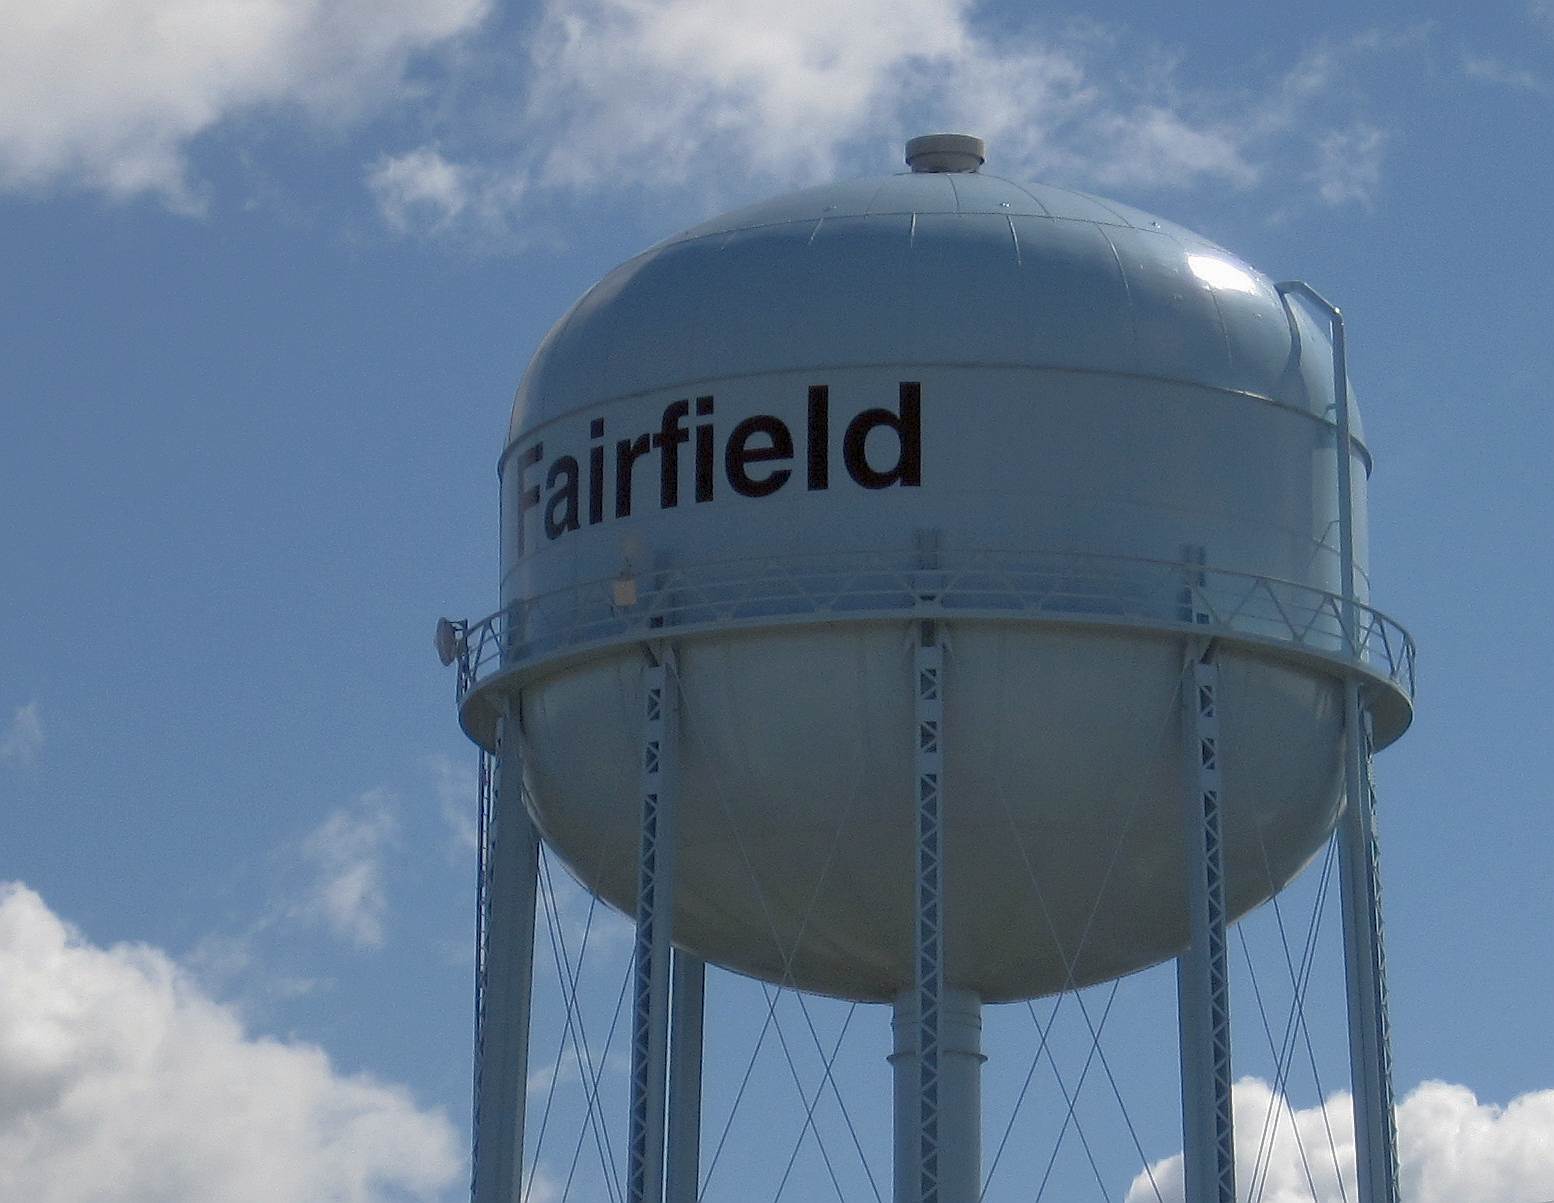 Fairfield Water tower